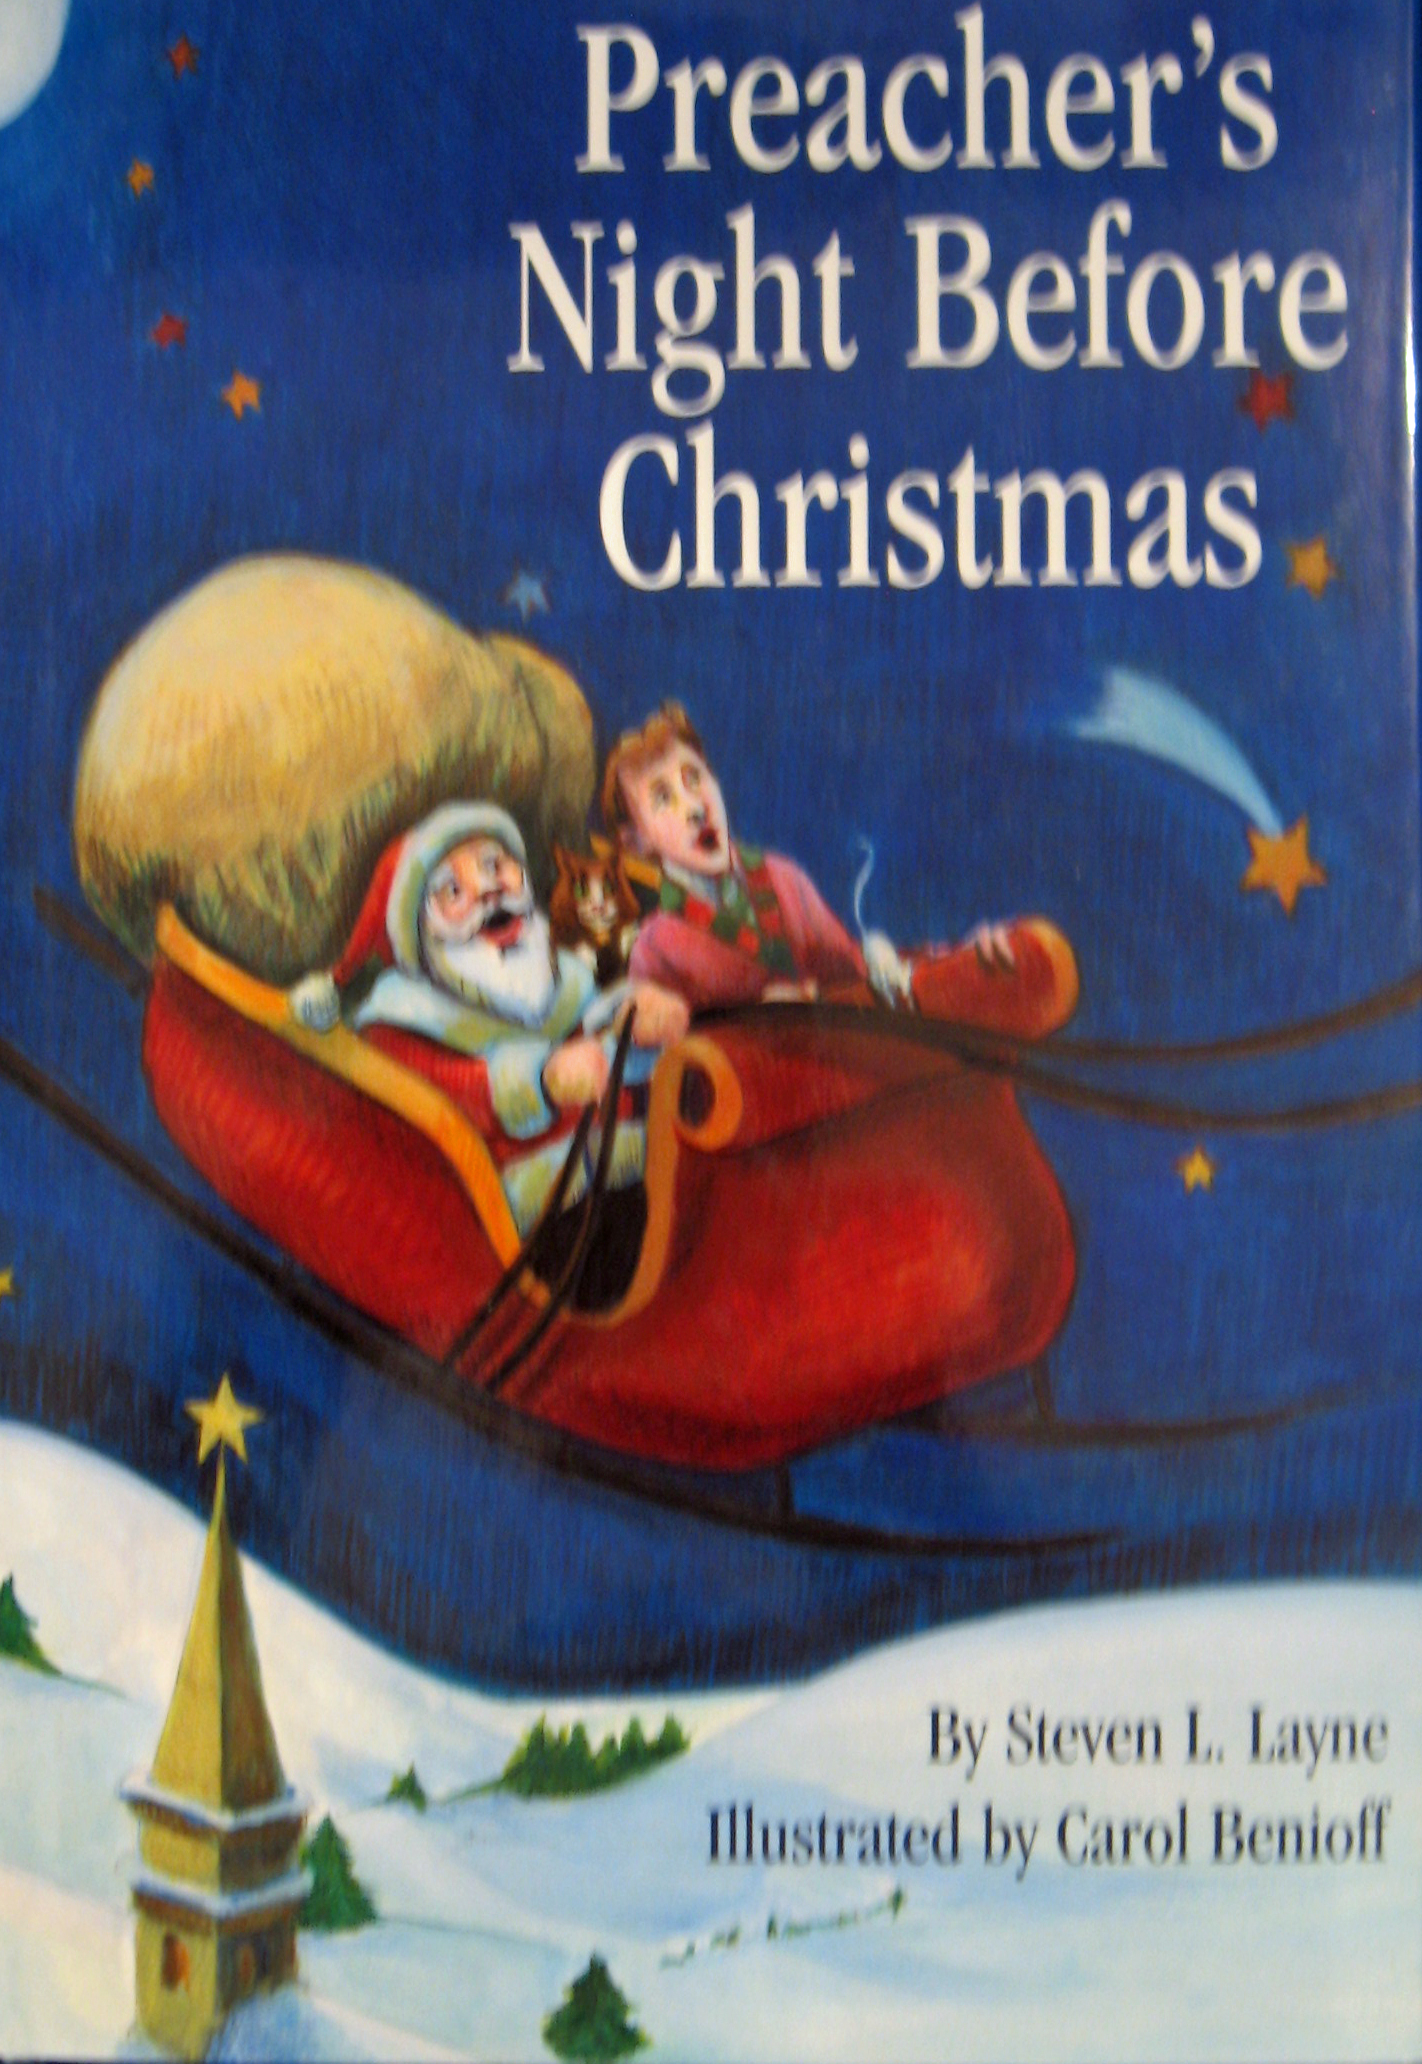 Preacher's Night Before Christmas by Steven L. Layne